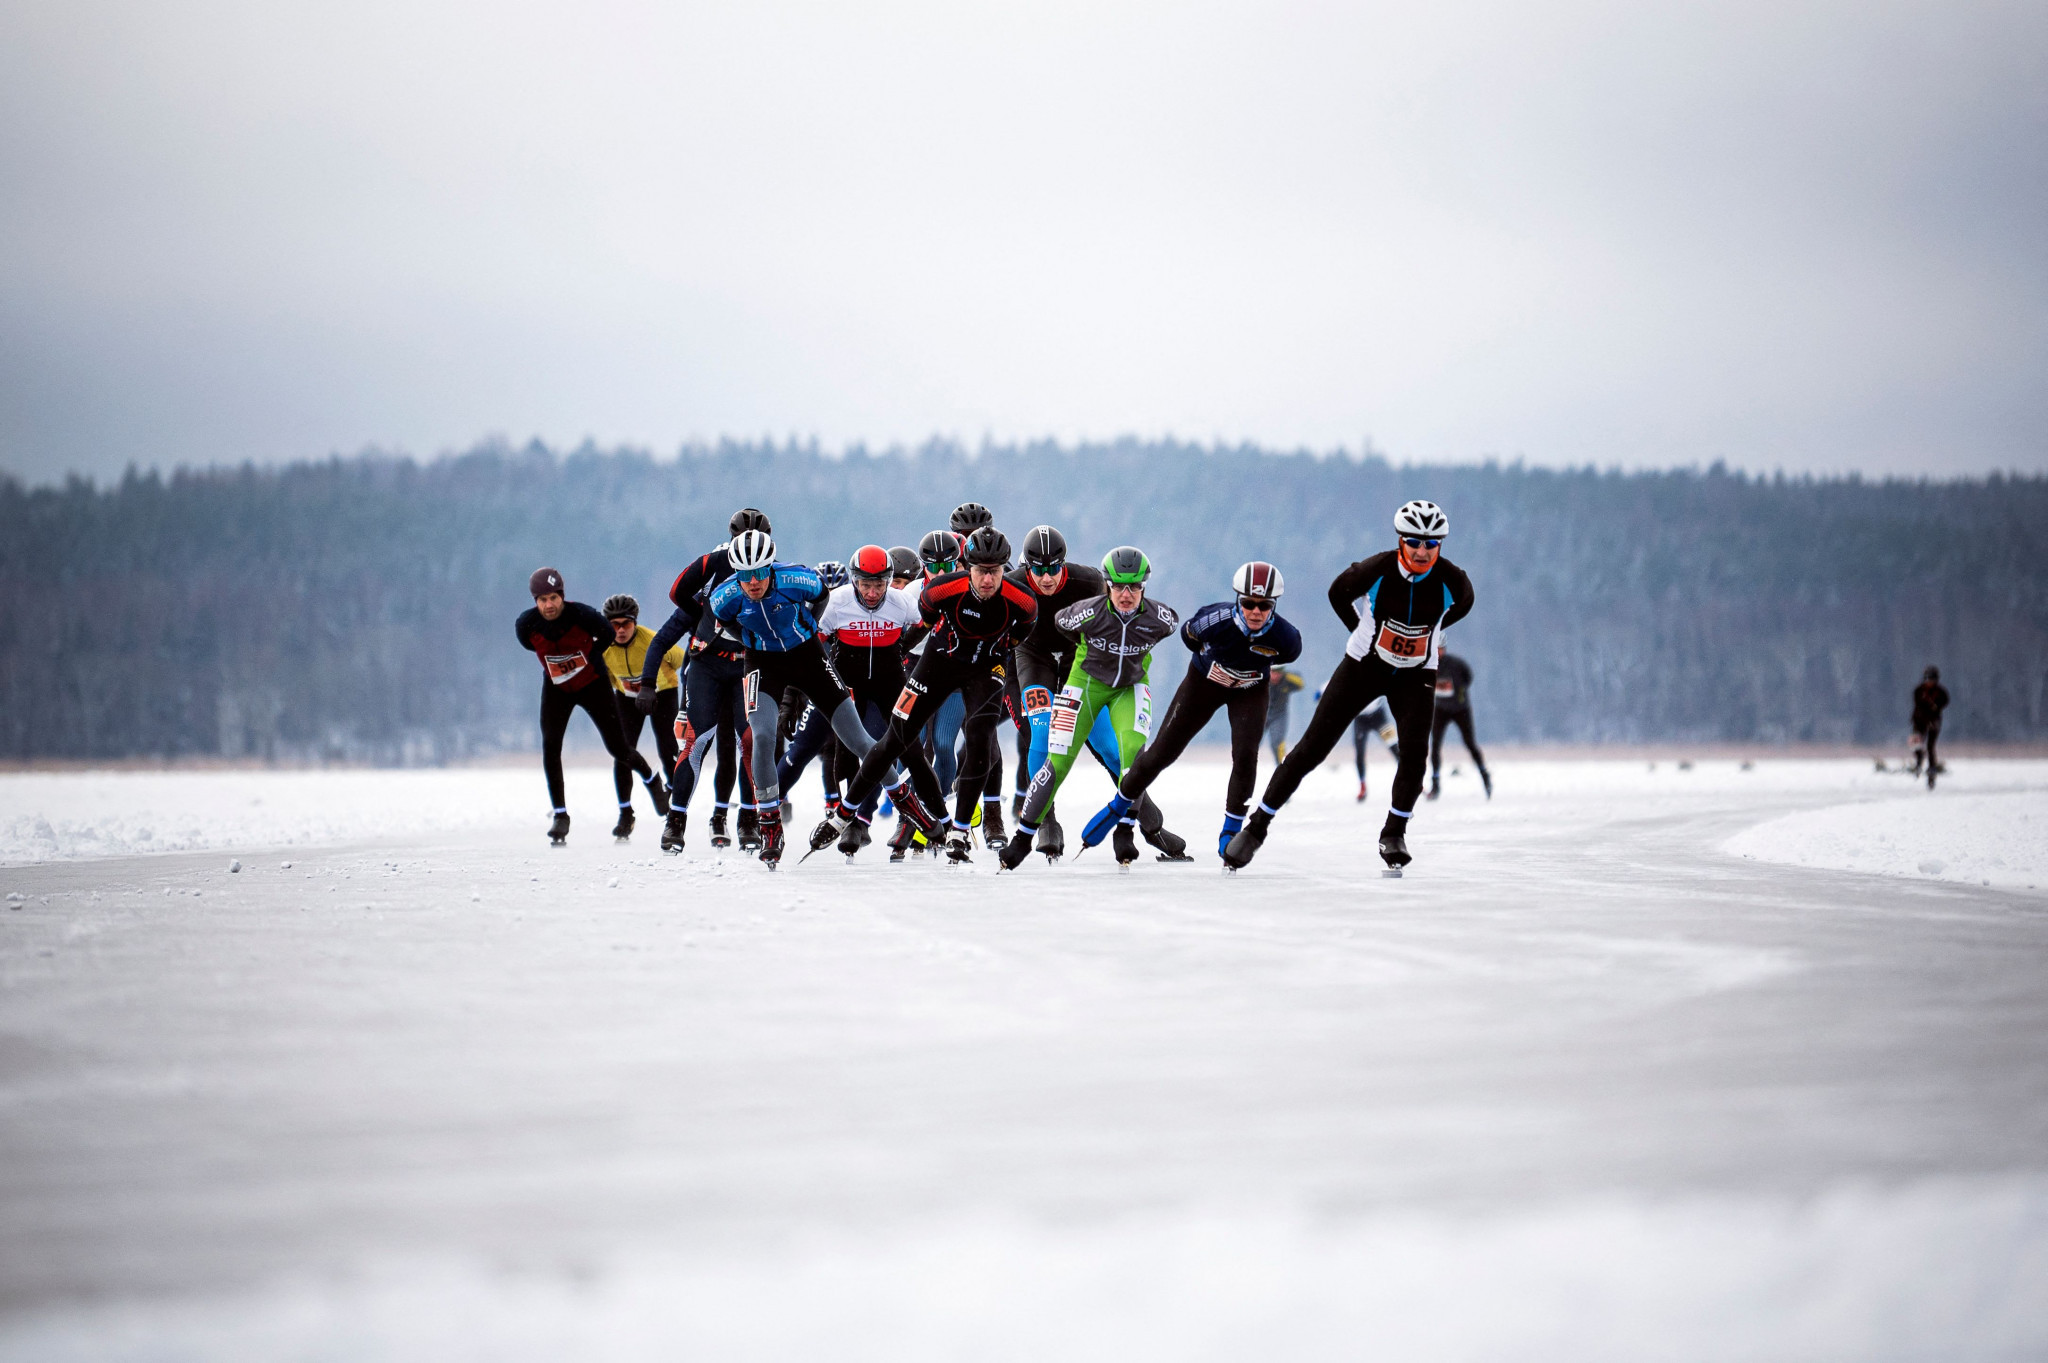 Lake Placid set to host FISU World University Speed Skating Championship